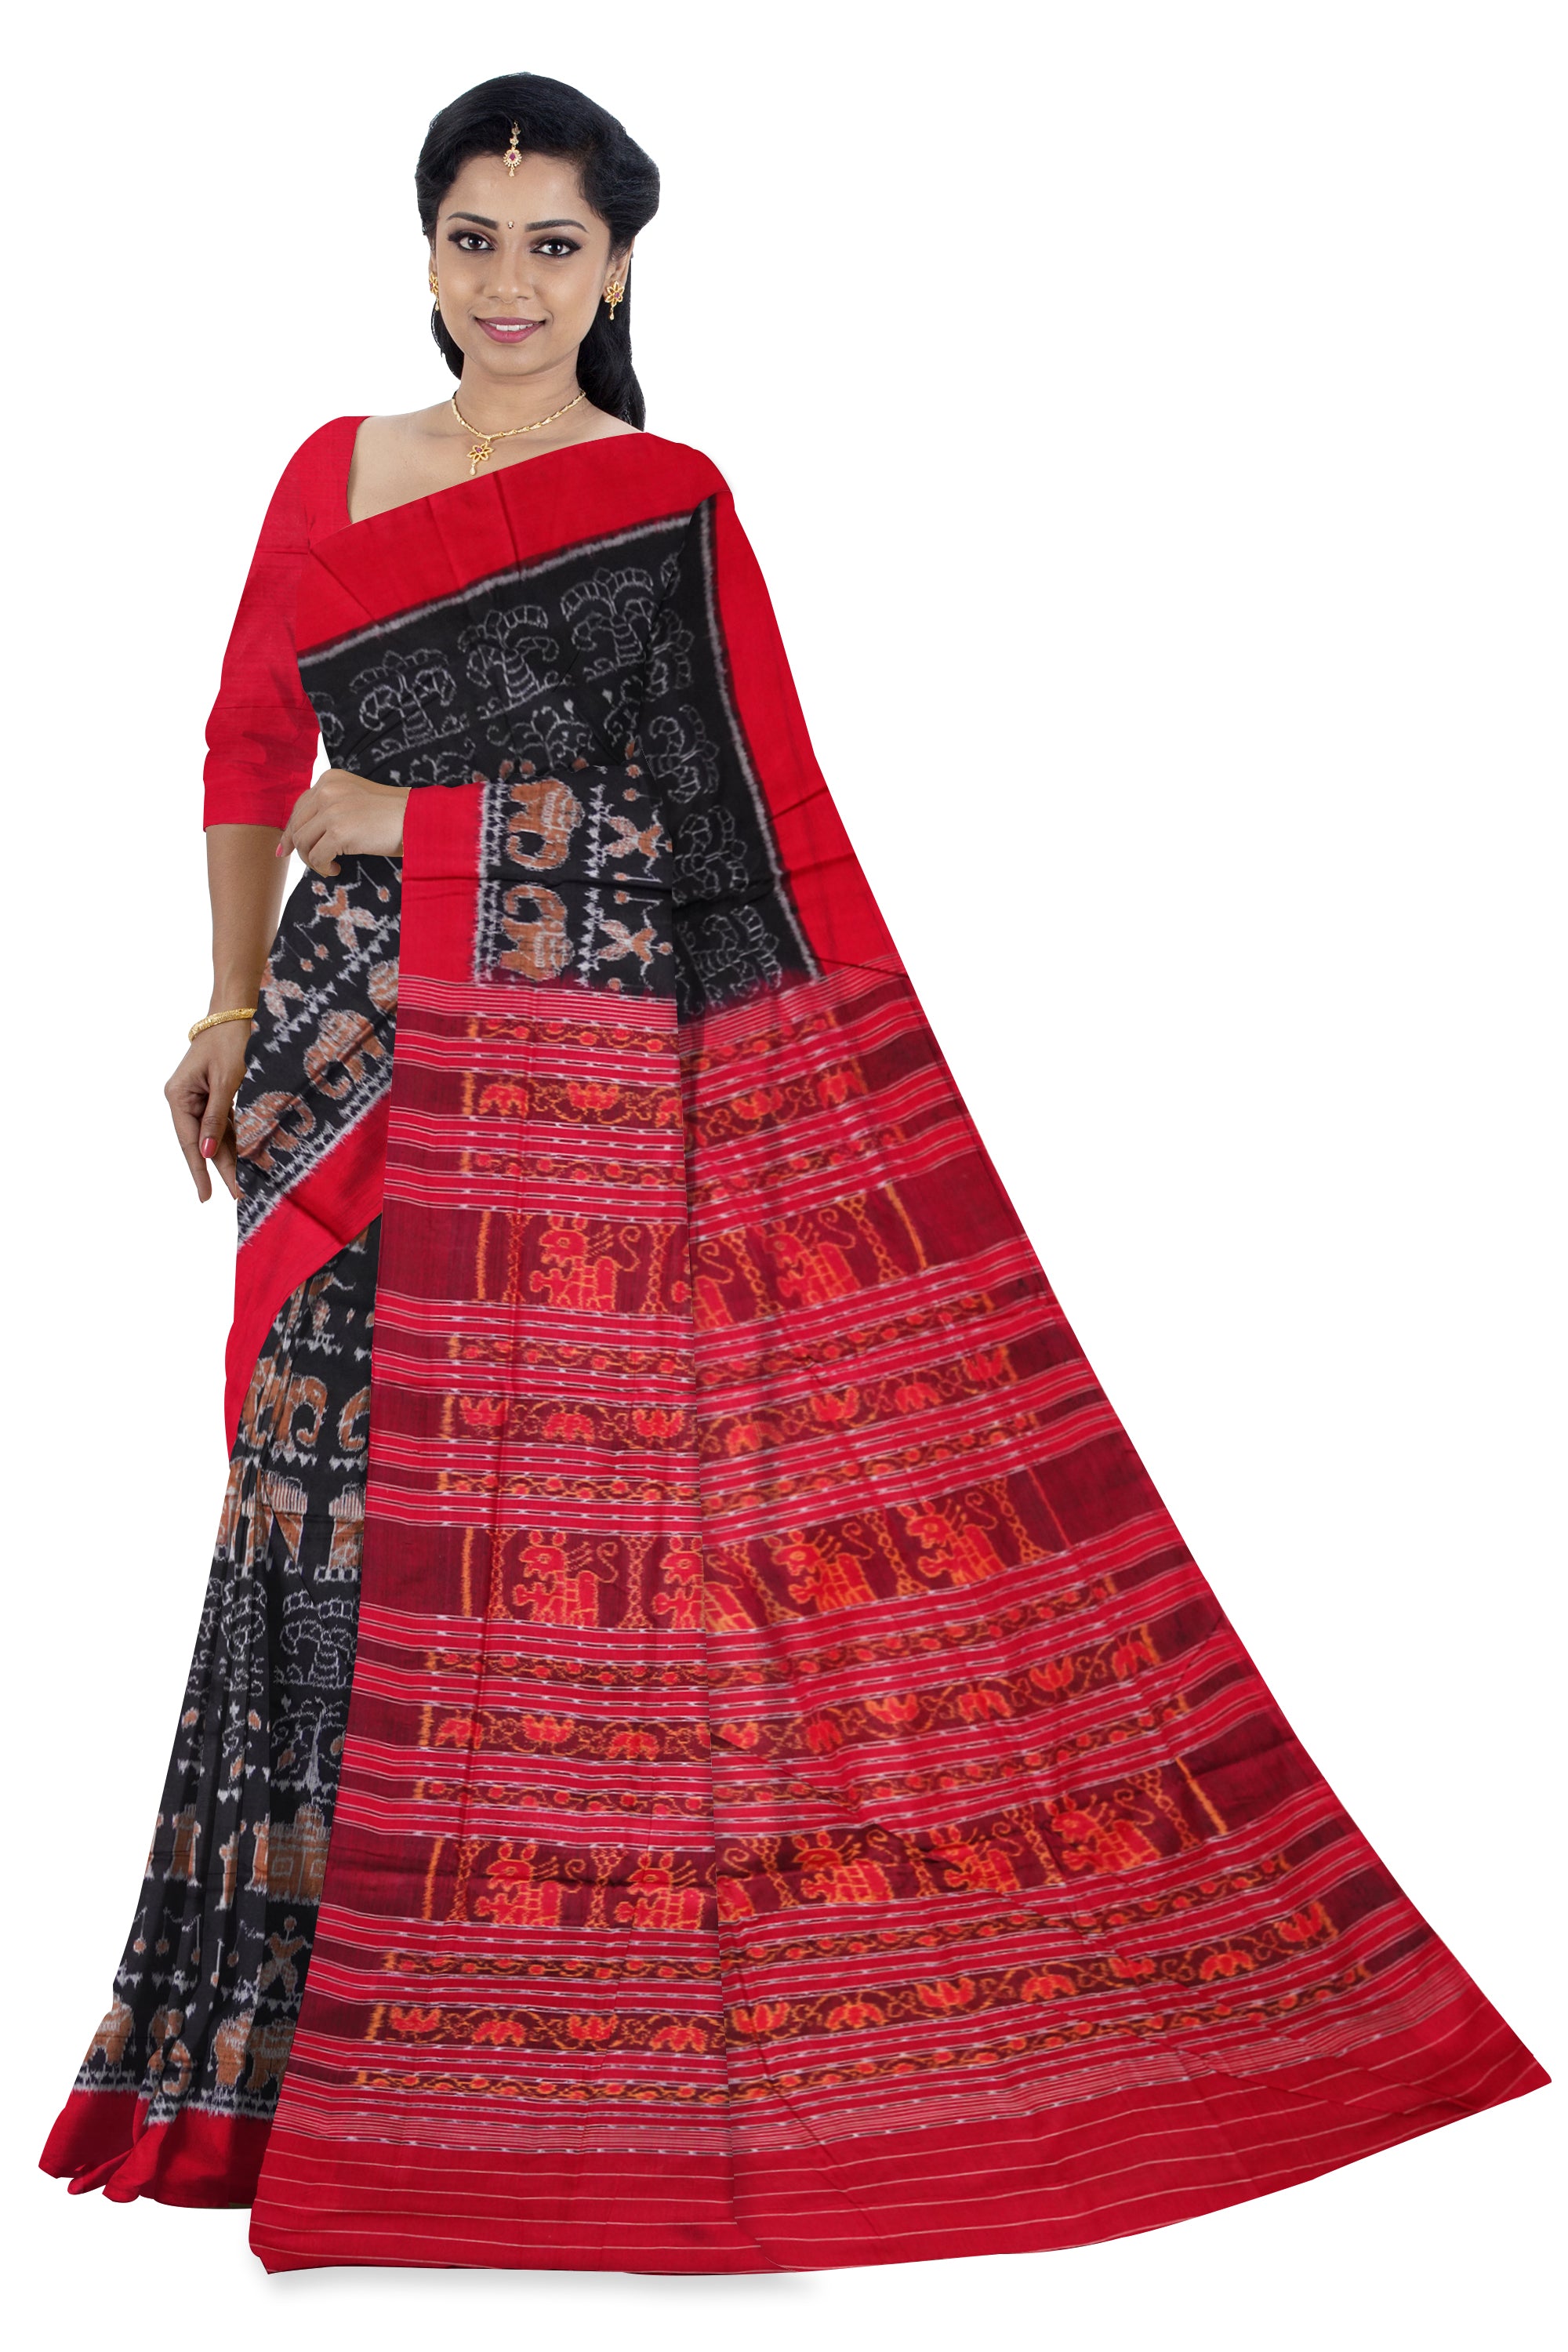 Terracotta work on full body in Black and red colour with plain border  sambalpuri cotton saree. - Koshali Arts & Crafts Enterprise